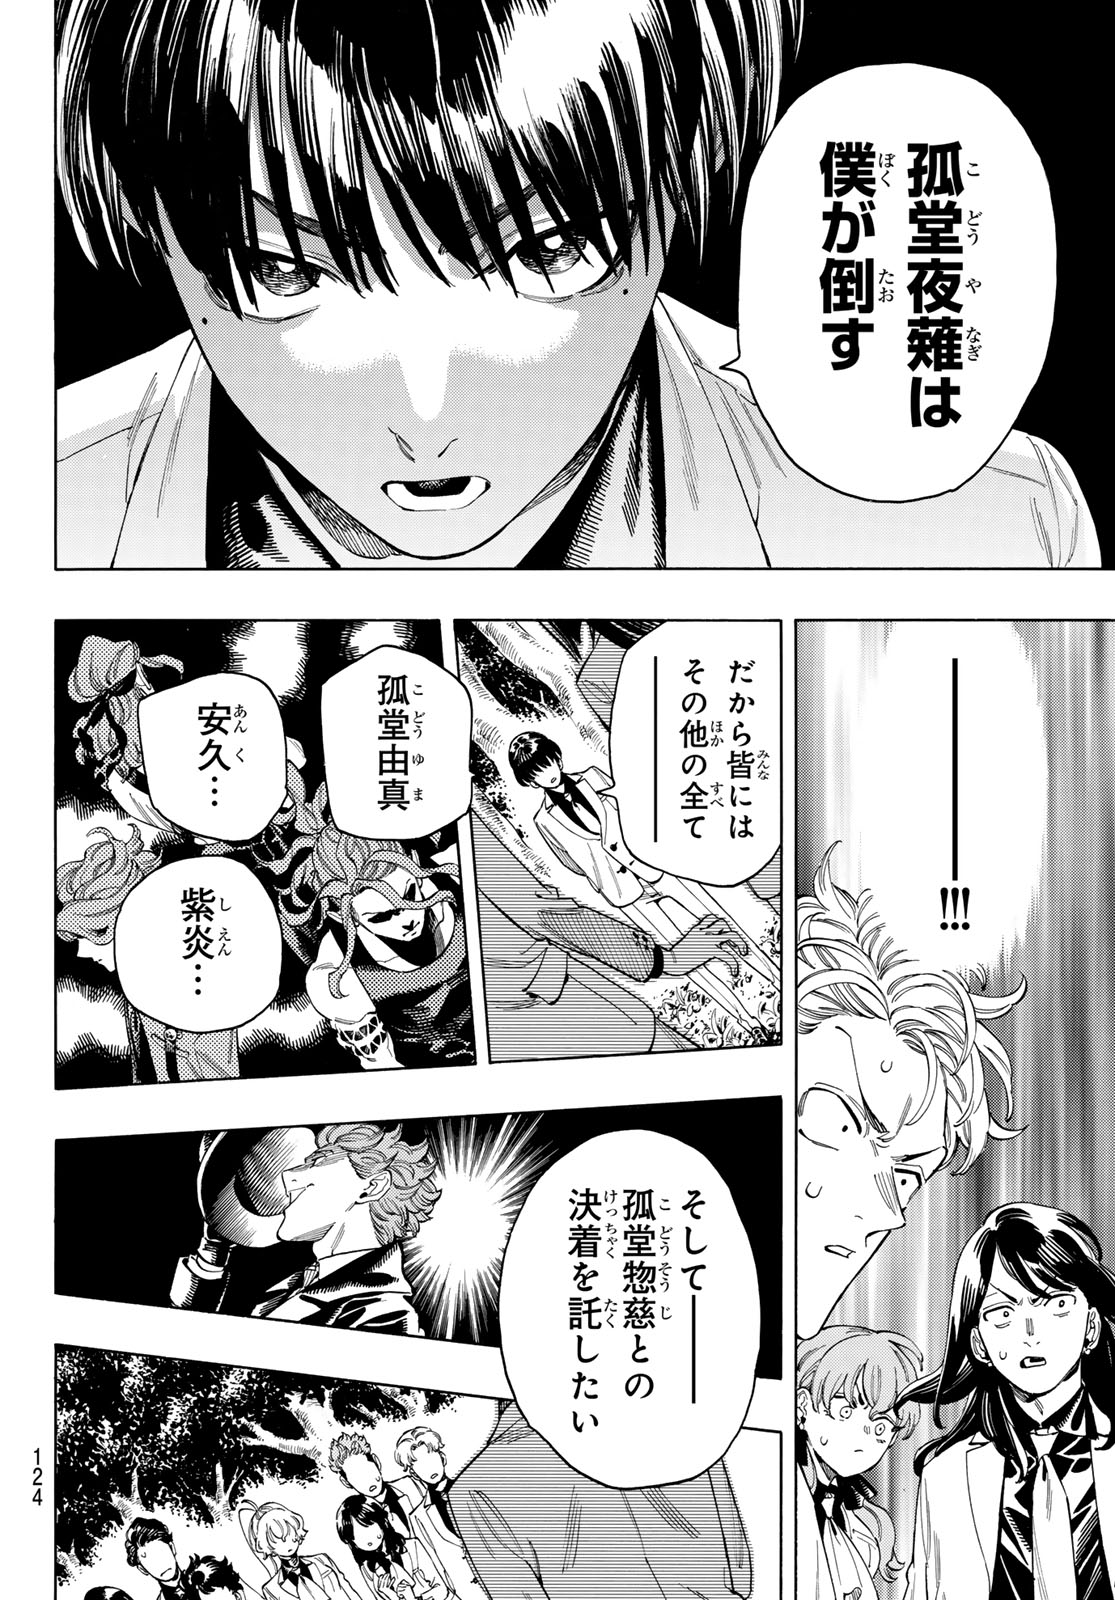 Akabane Honeko no Bodyguard - Chapter 87 - Page 13